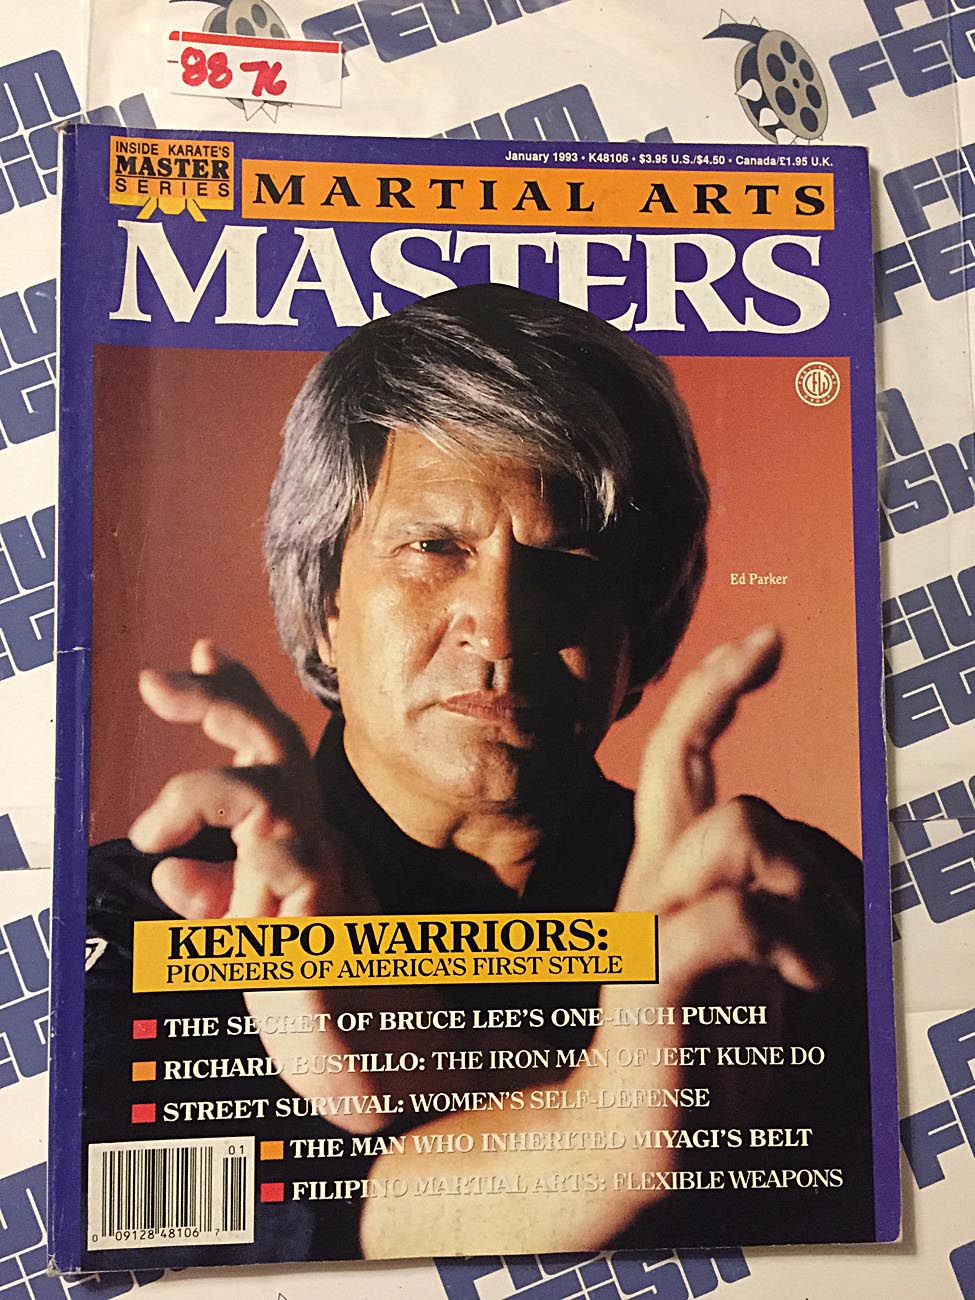 Inside Karate’s Master Series: Martial Arts Masters Ed Parker Kenpo Warriors [8876]